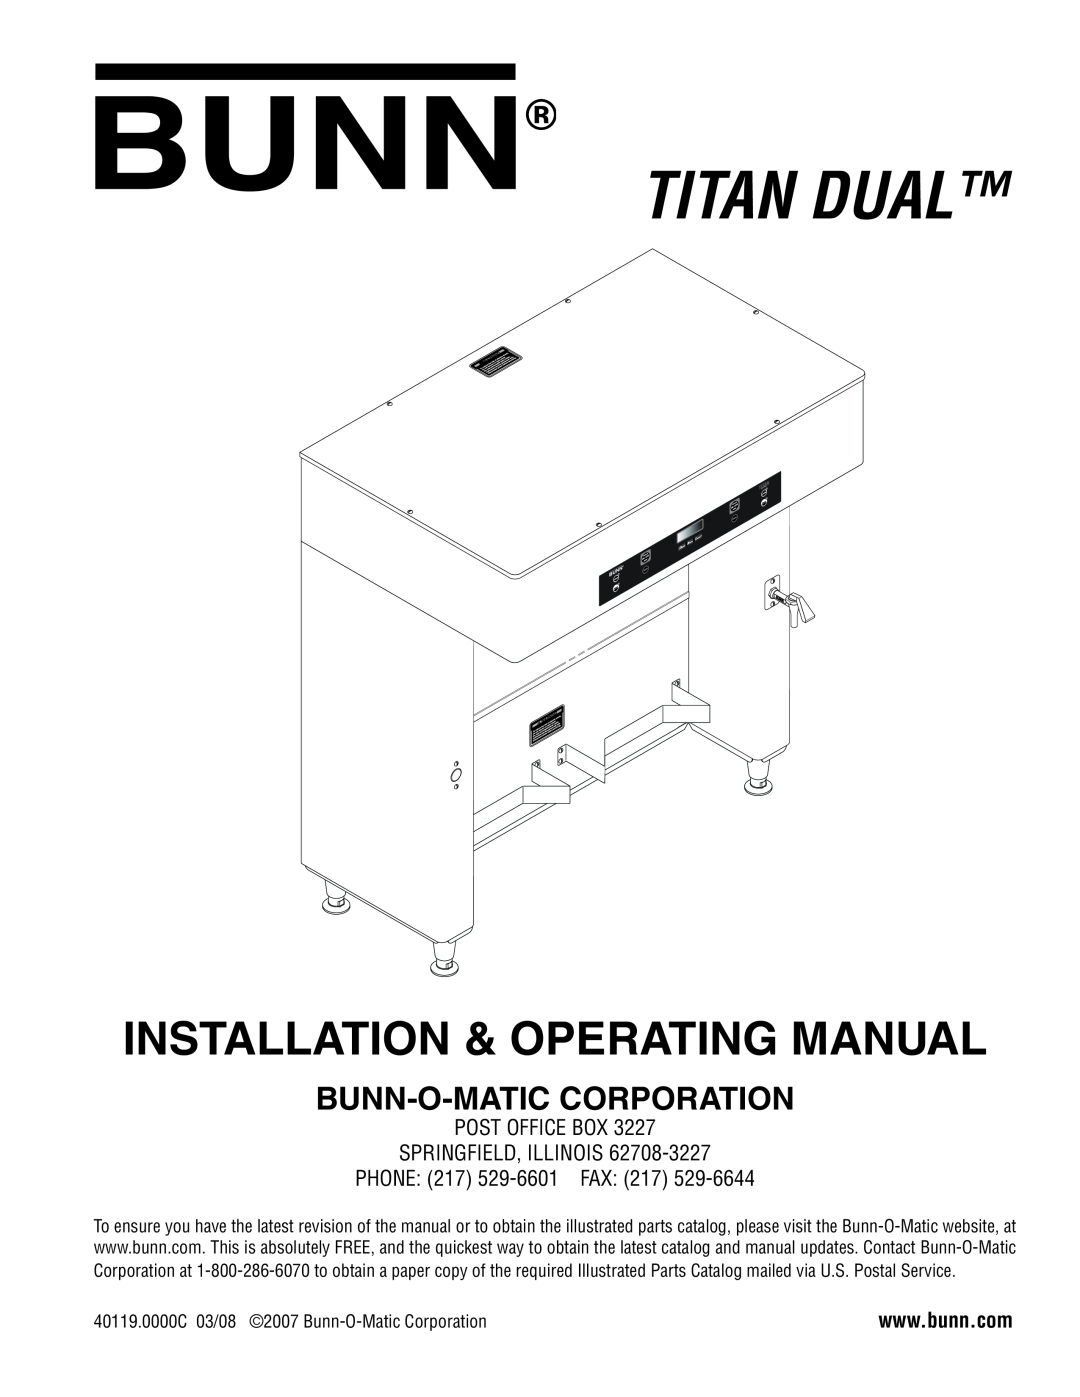 Bunn TITAN DUAL manual Titan Dual, Installation & Operating Manual, Bunn-O-Matic Corporation 